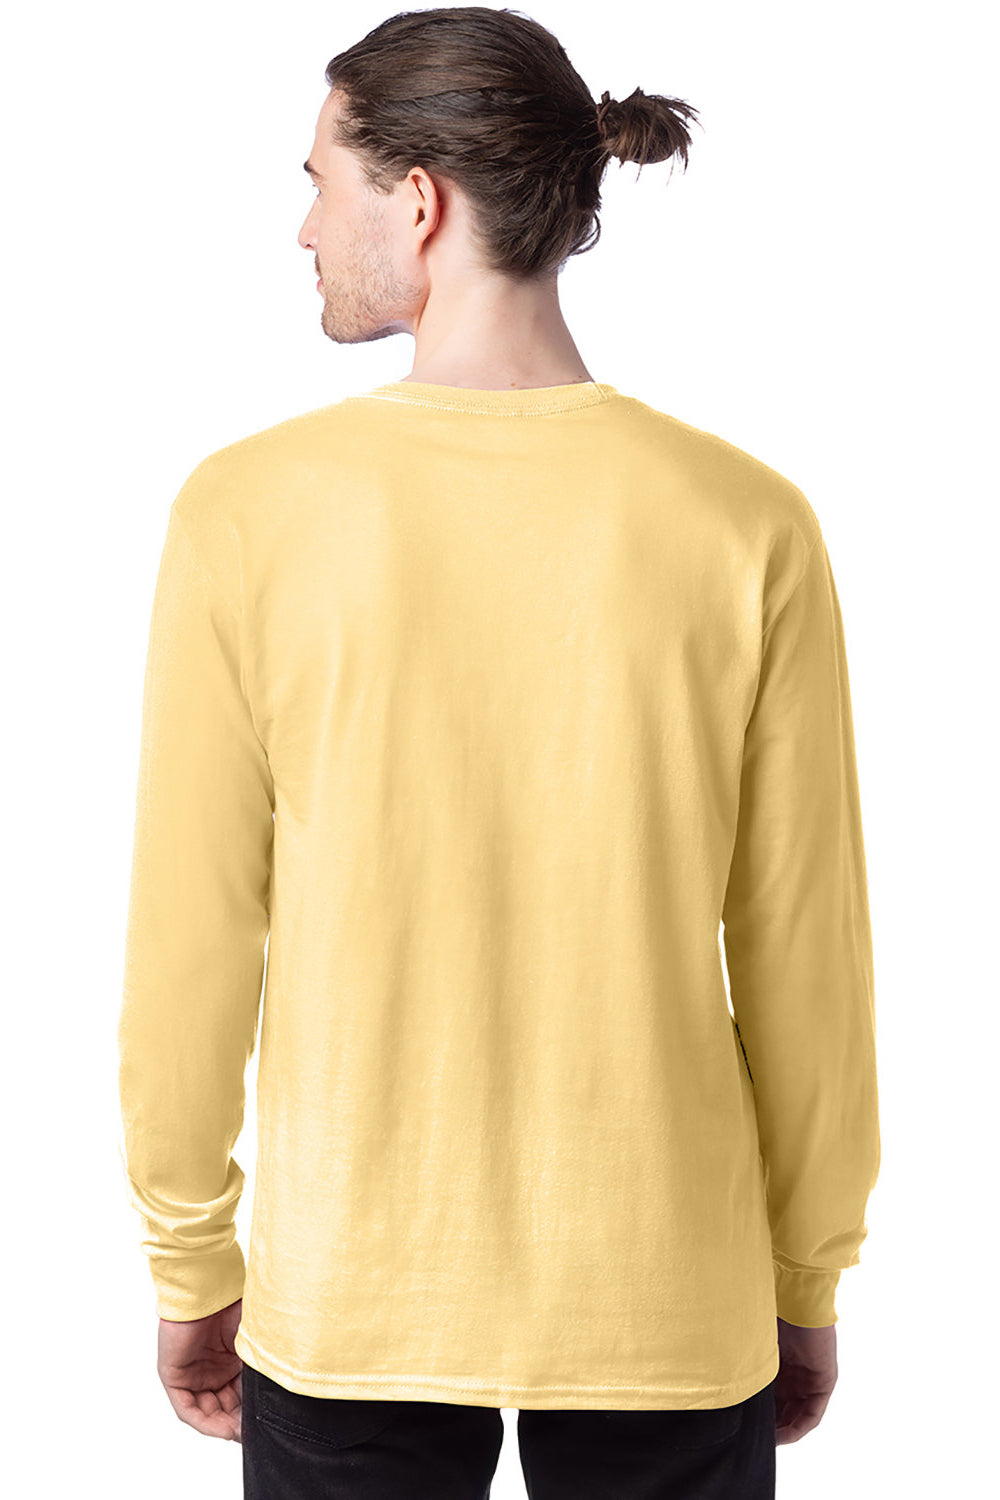 Hanes 5286 Mens ComfortSoft Long Sleeve Crewneck T-Shirt Athletic Gold Back